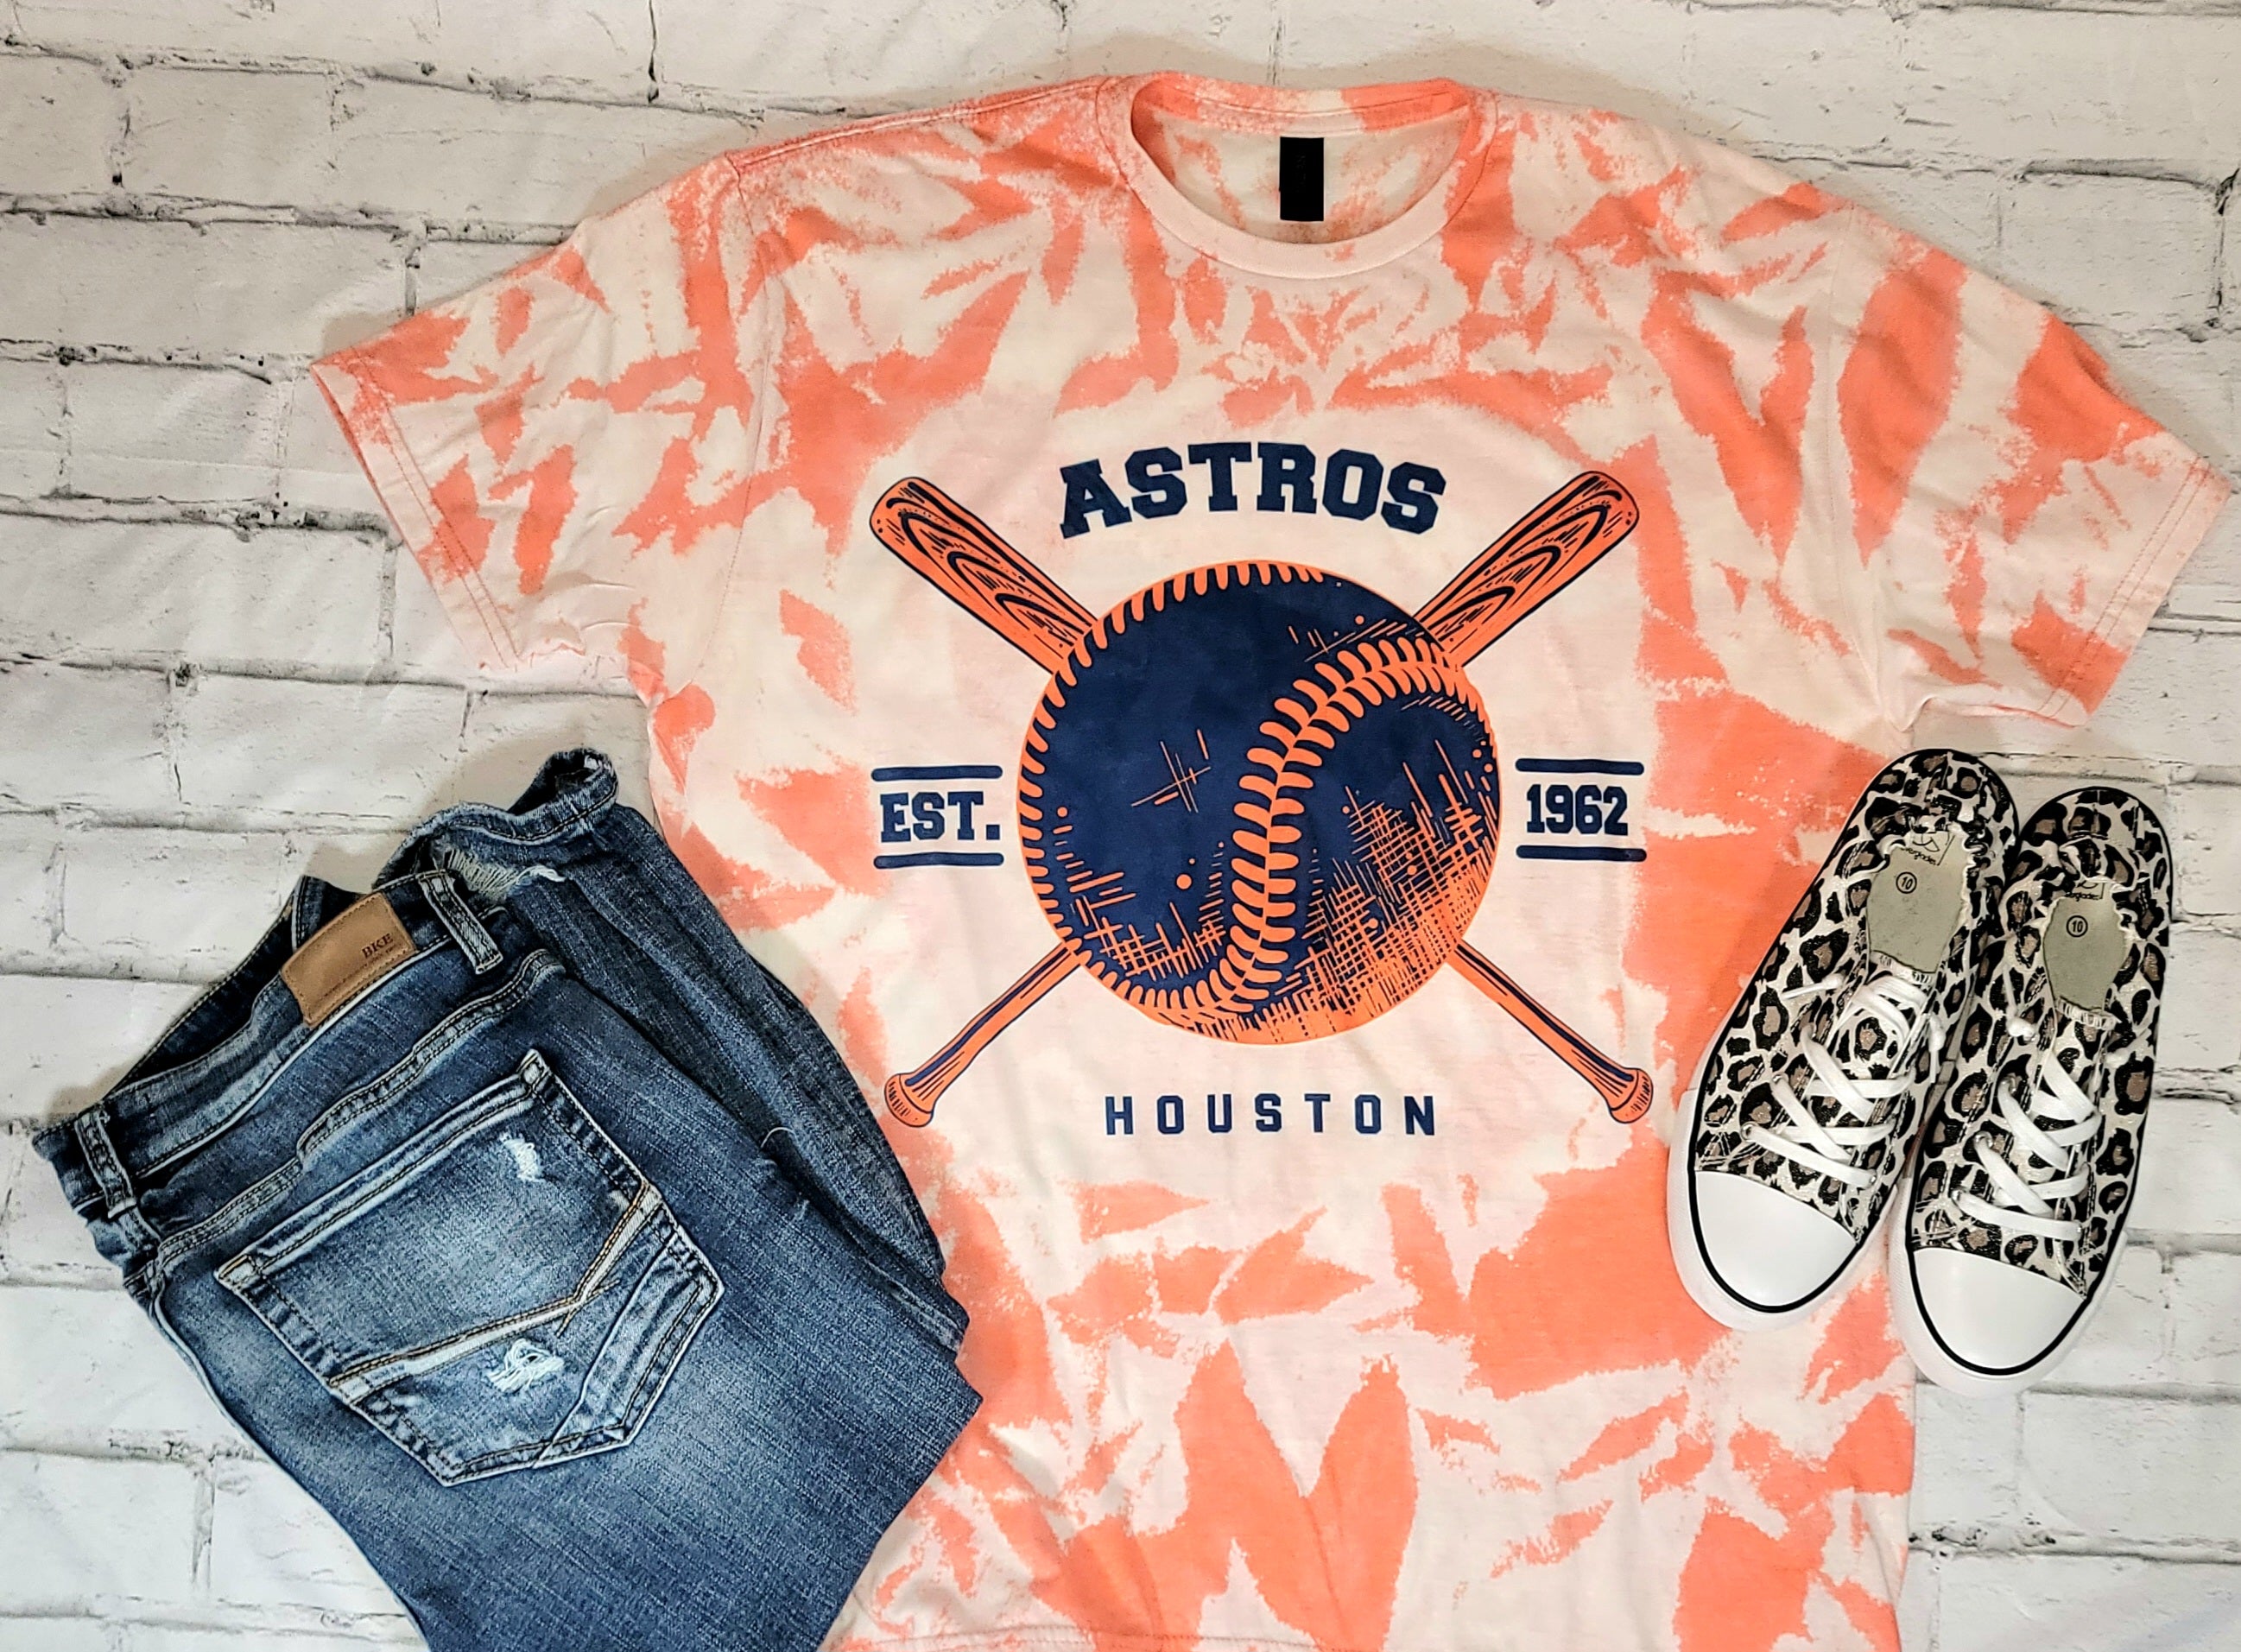 Astros T-shirt